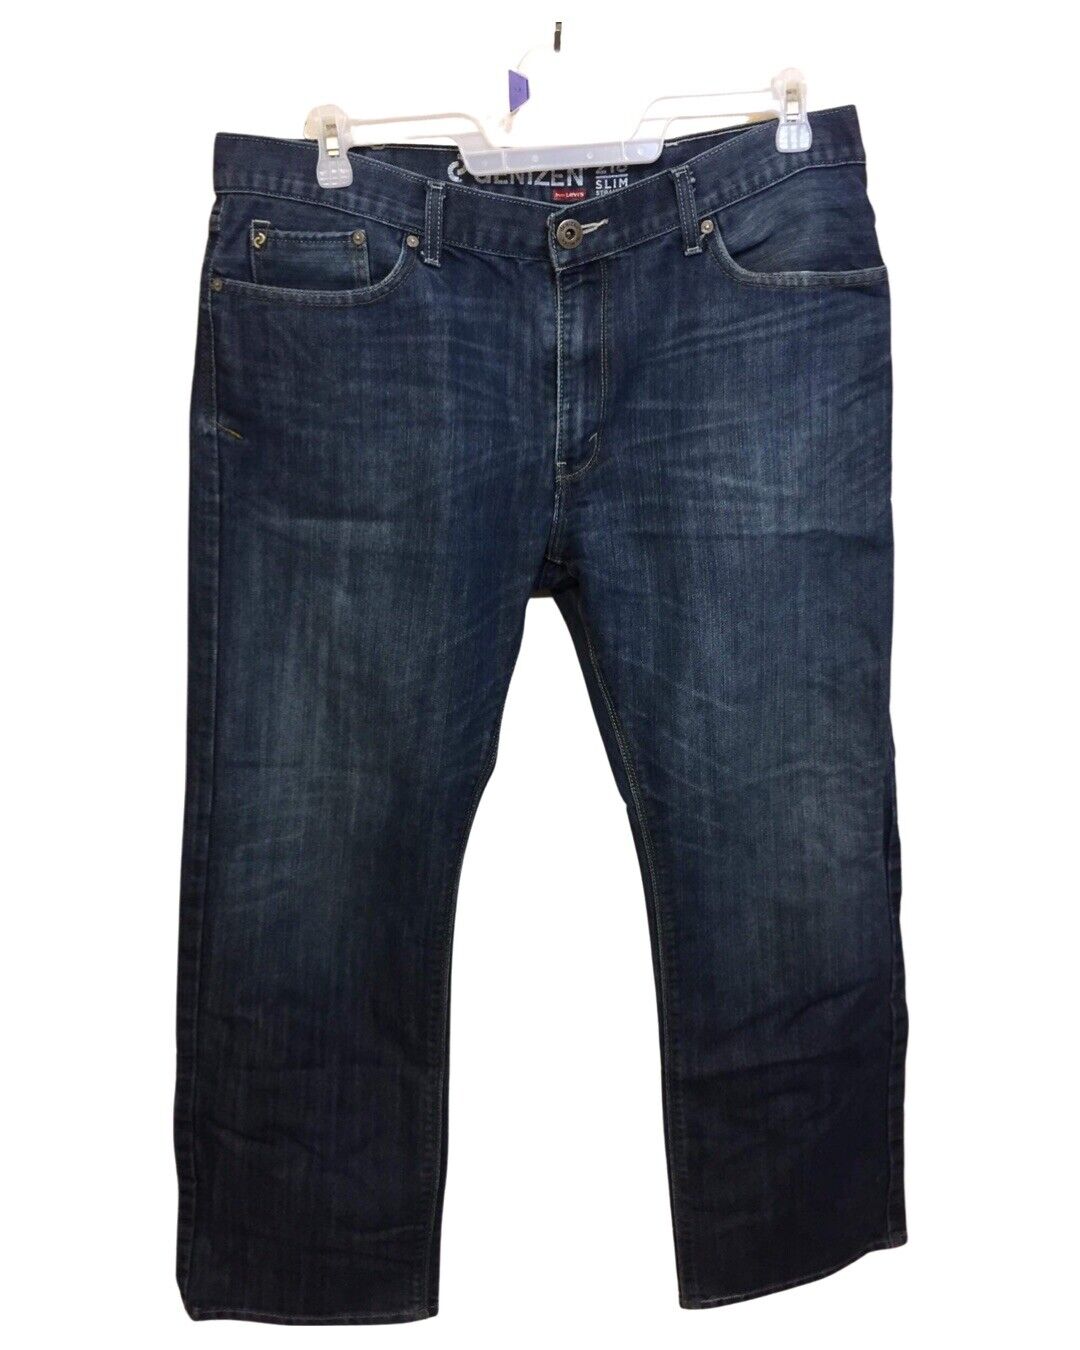 Levis Denizen 218 Slim Straight Fit Denim Blue Jeans Men's Size 38 X 30 |  eBay